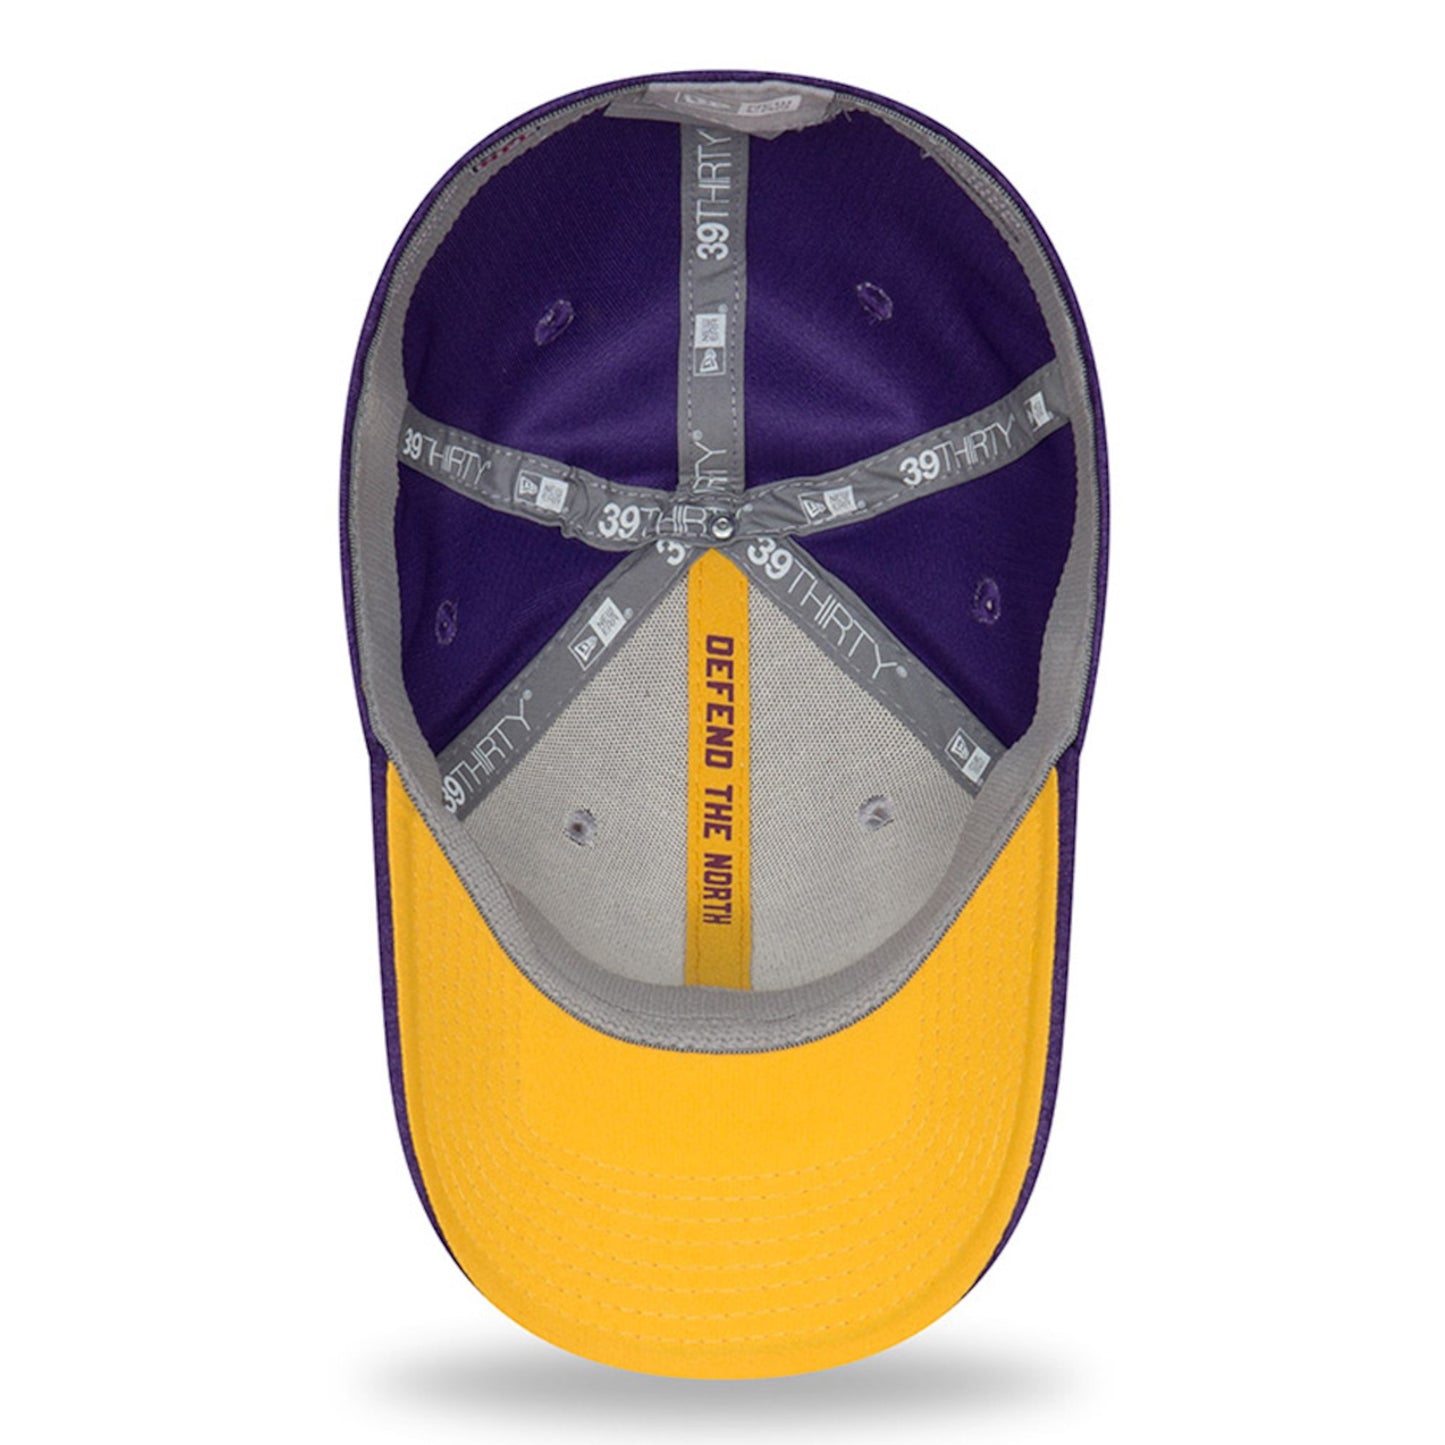 Men's Minnesota Vikings New Era Heather Gray/Purple NFL18 Sideline Road Official 39THIRTY Flex Hat